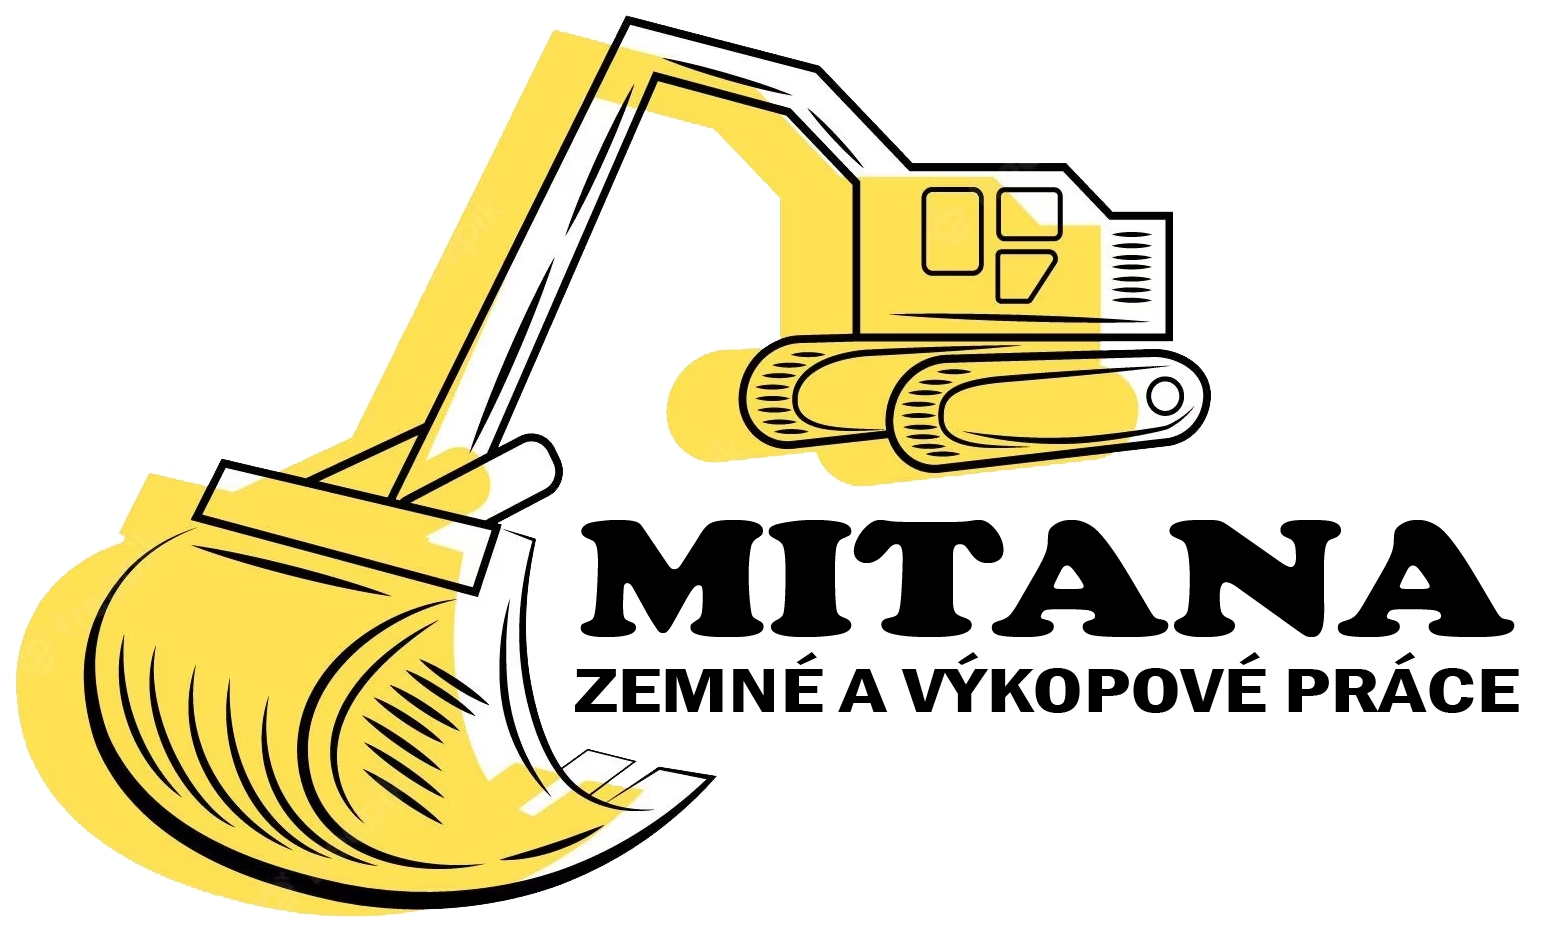 Zemné a výkopové práce - Ľubomír Mitana